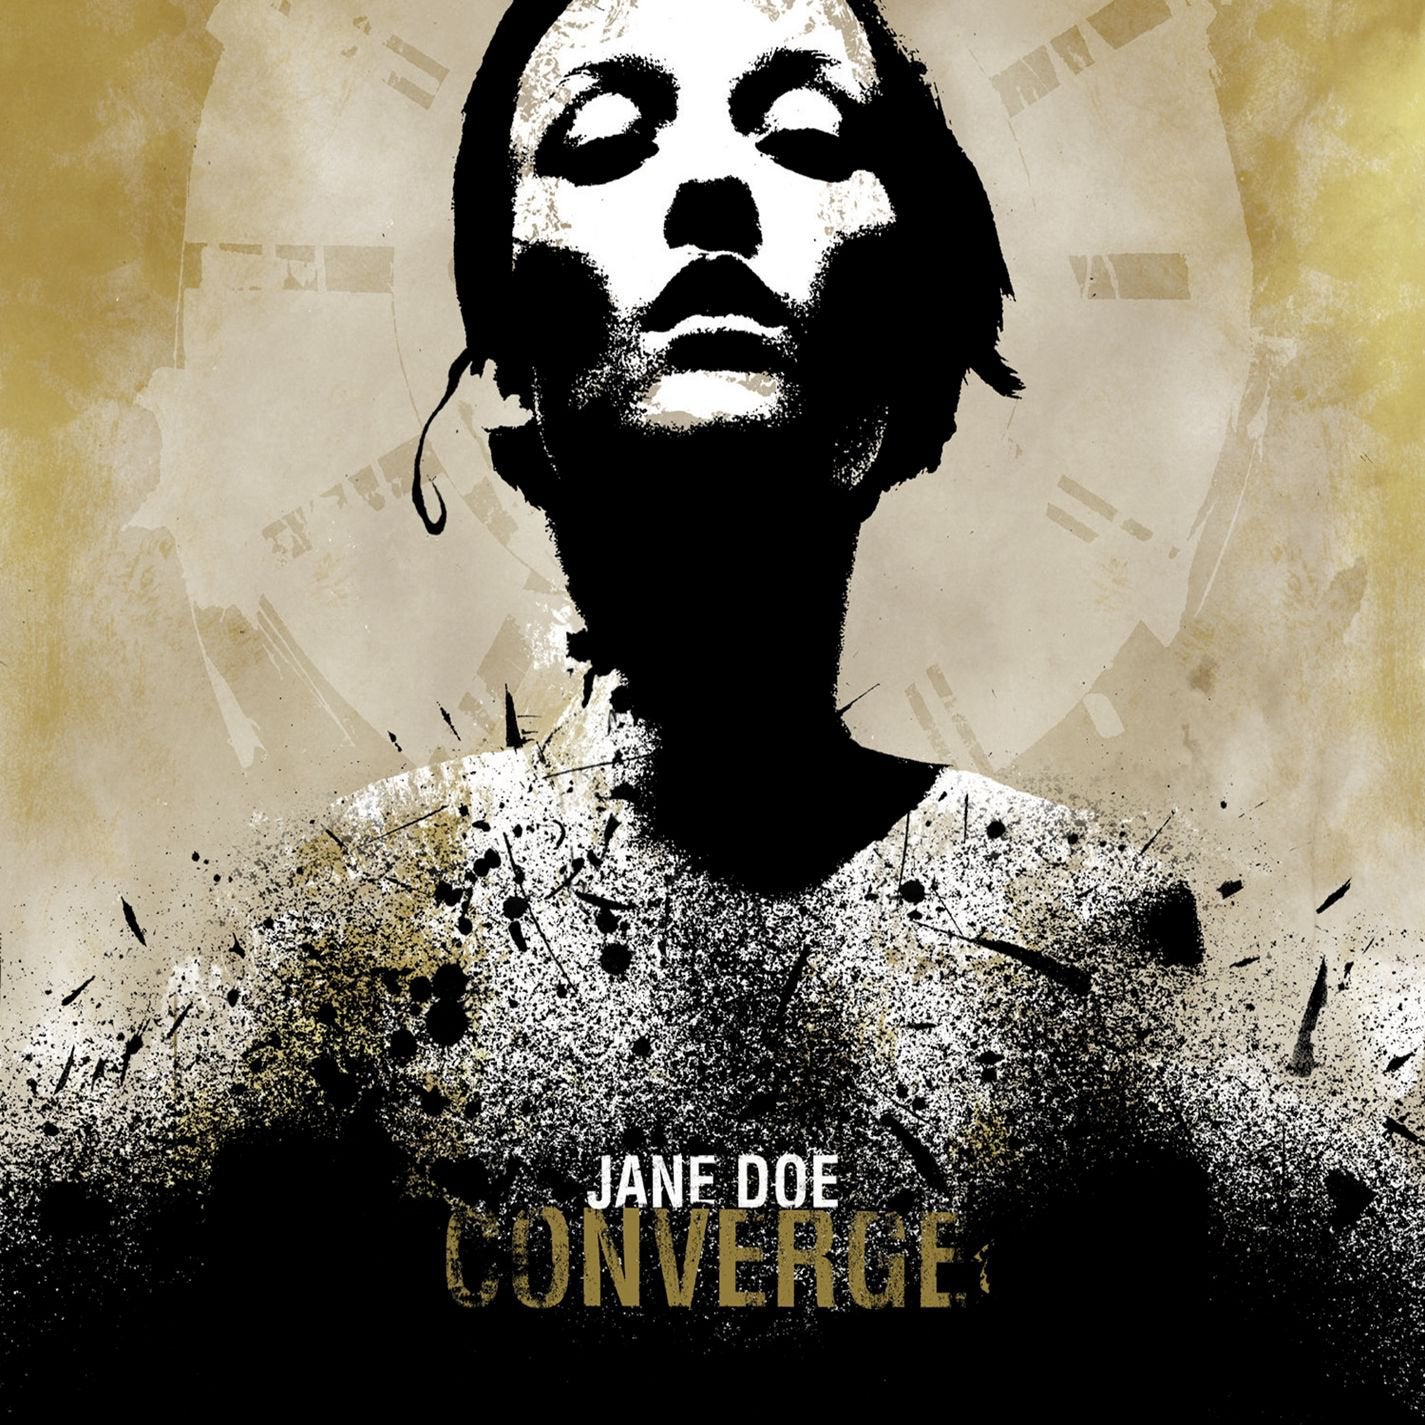 JANE DOE / CONVERGE